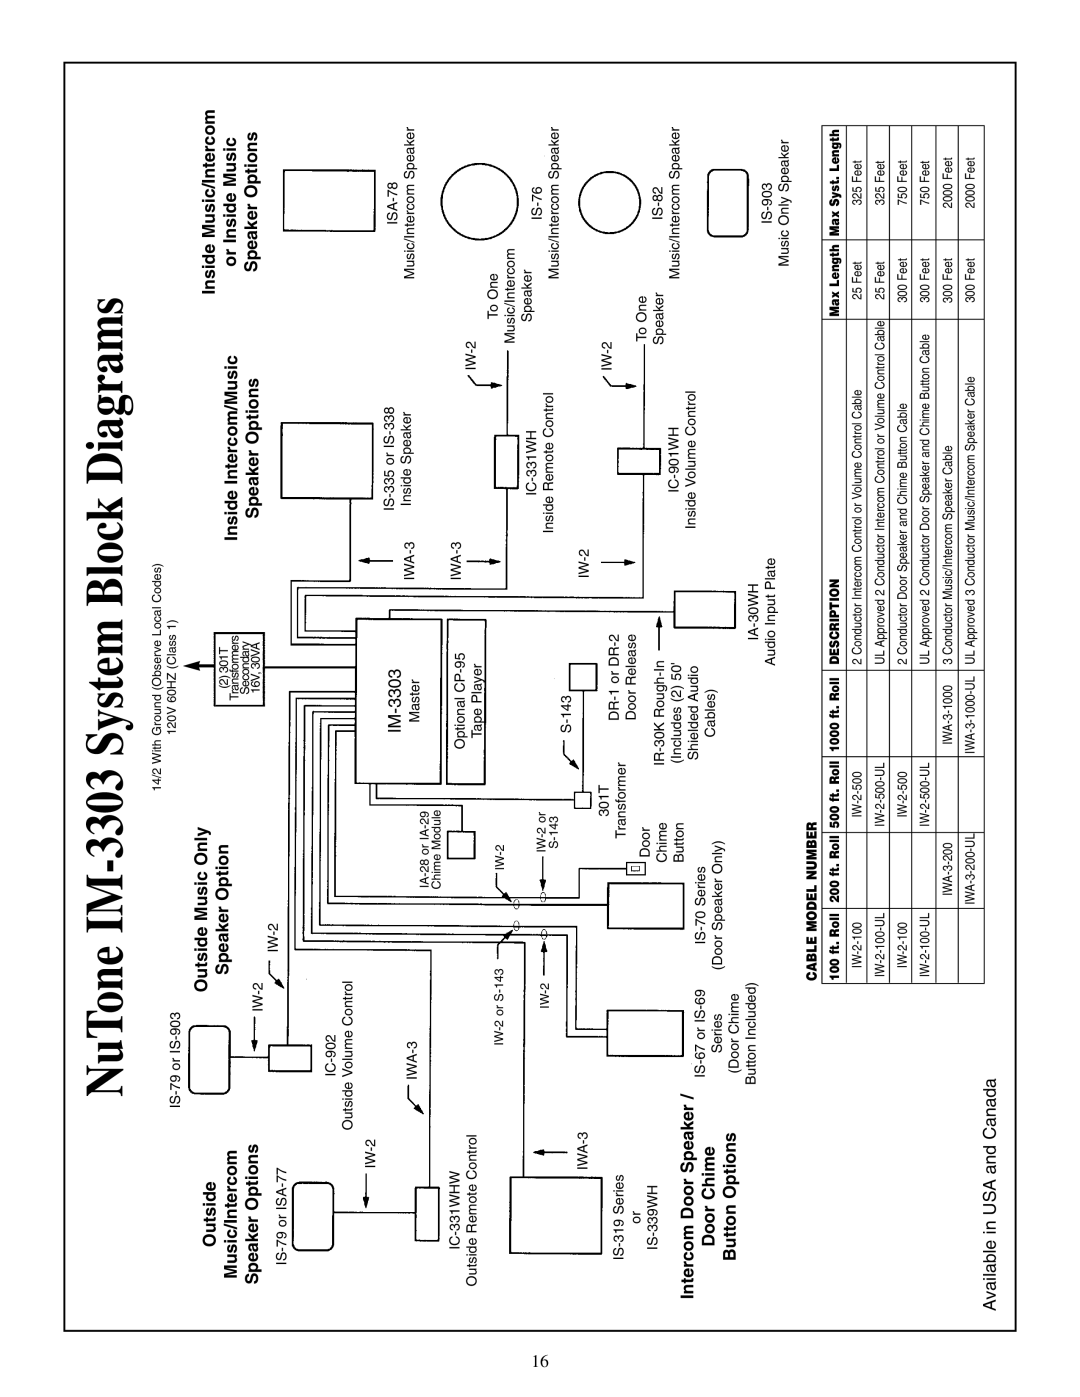 NuTone IM-4406, IM-5000, IMA-516, IM-3204WH, IK-15, IK-25 manual NuTone IM-3303 System Block Diagrams 